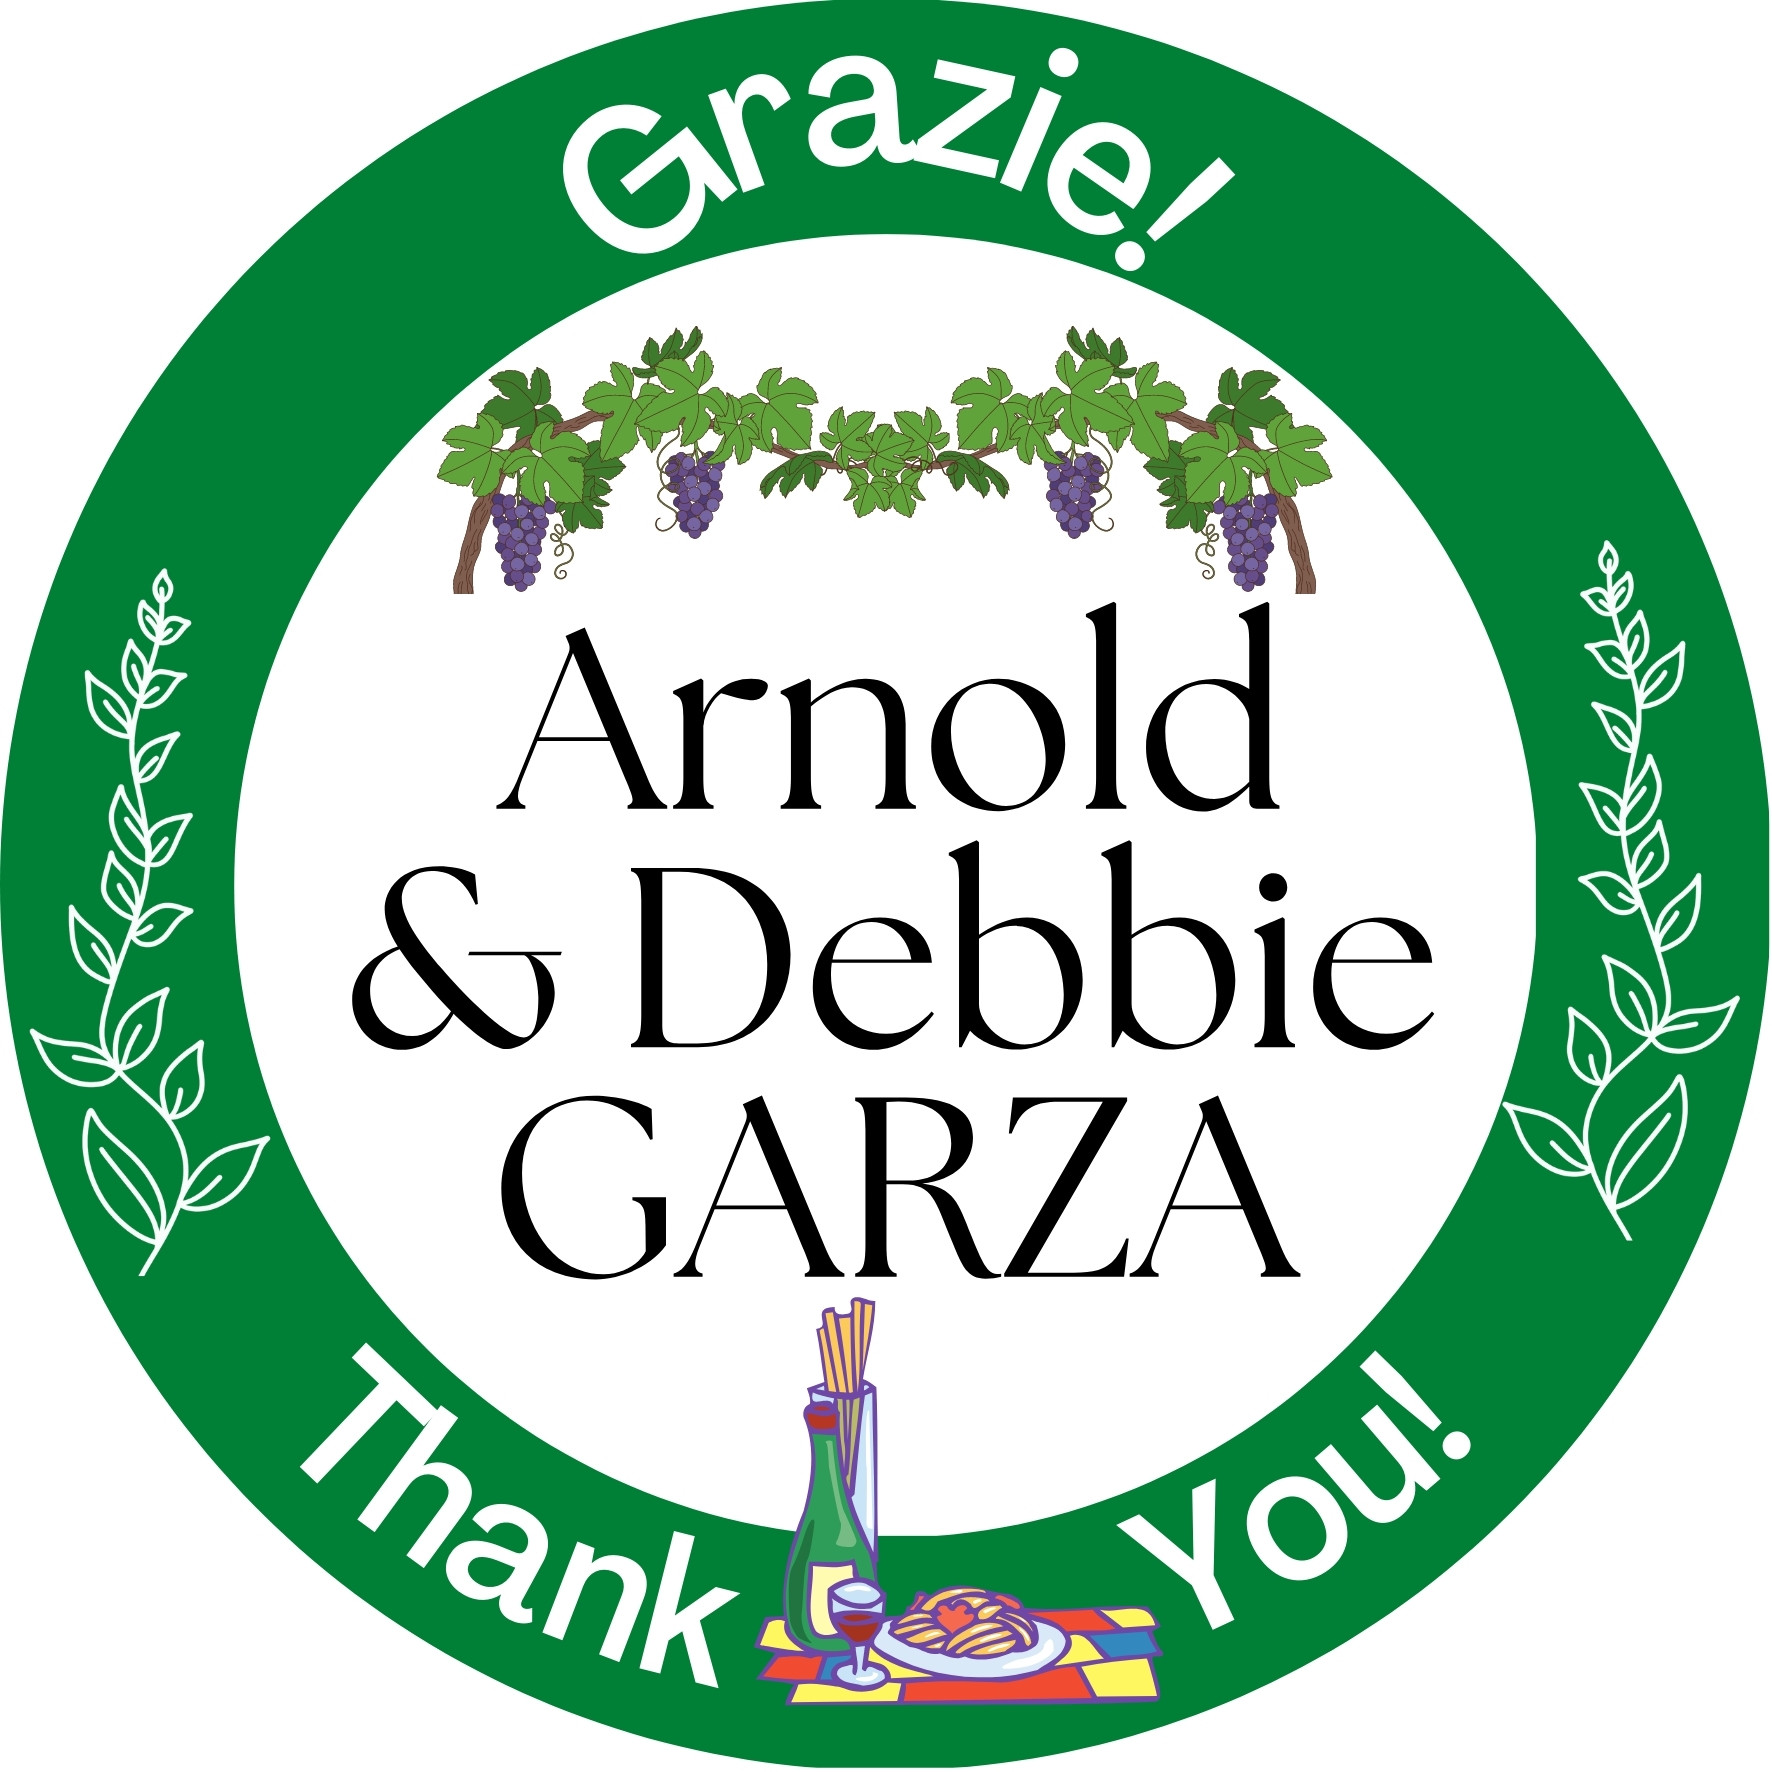 Arnold & Debbie Garza Napoli Sponsor